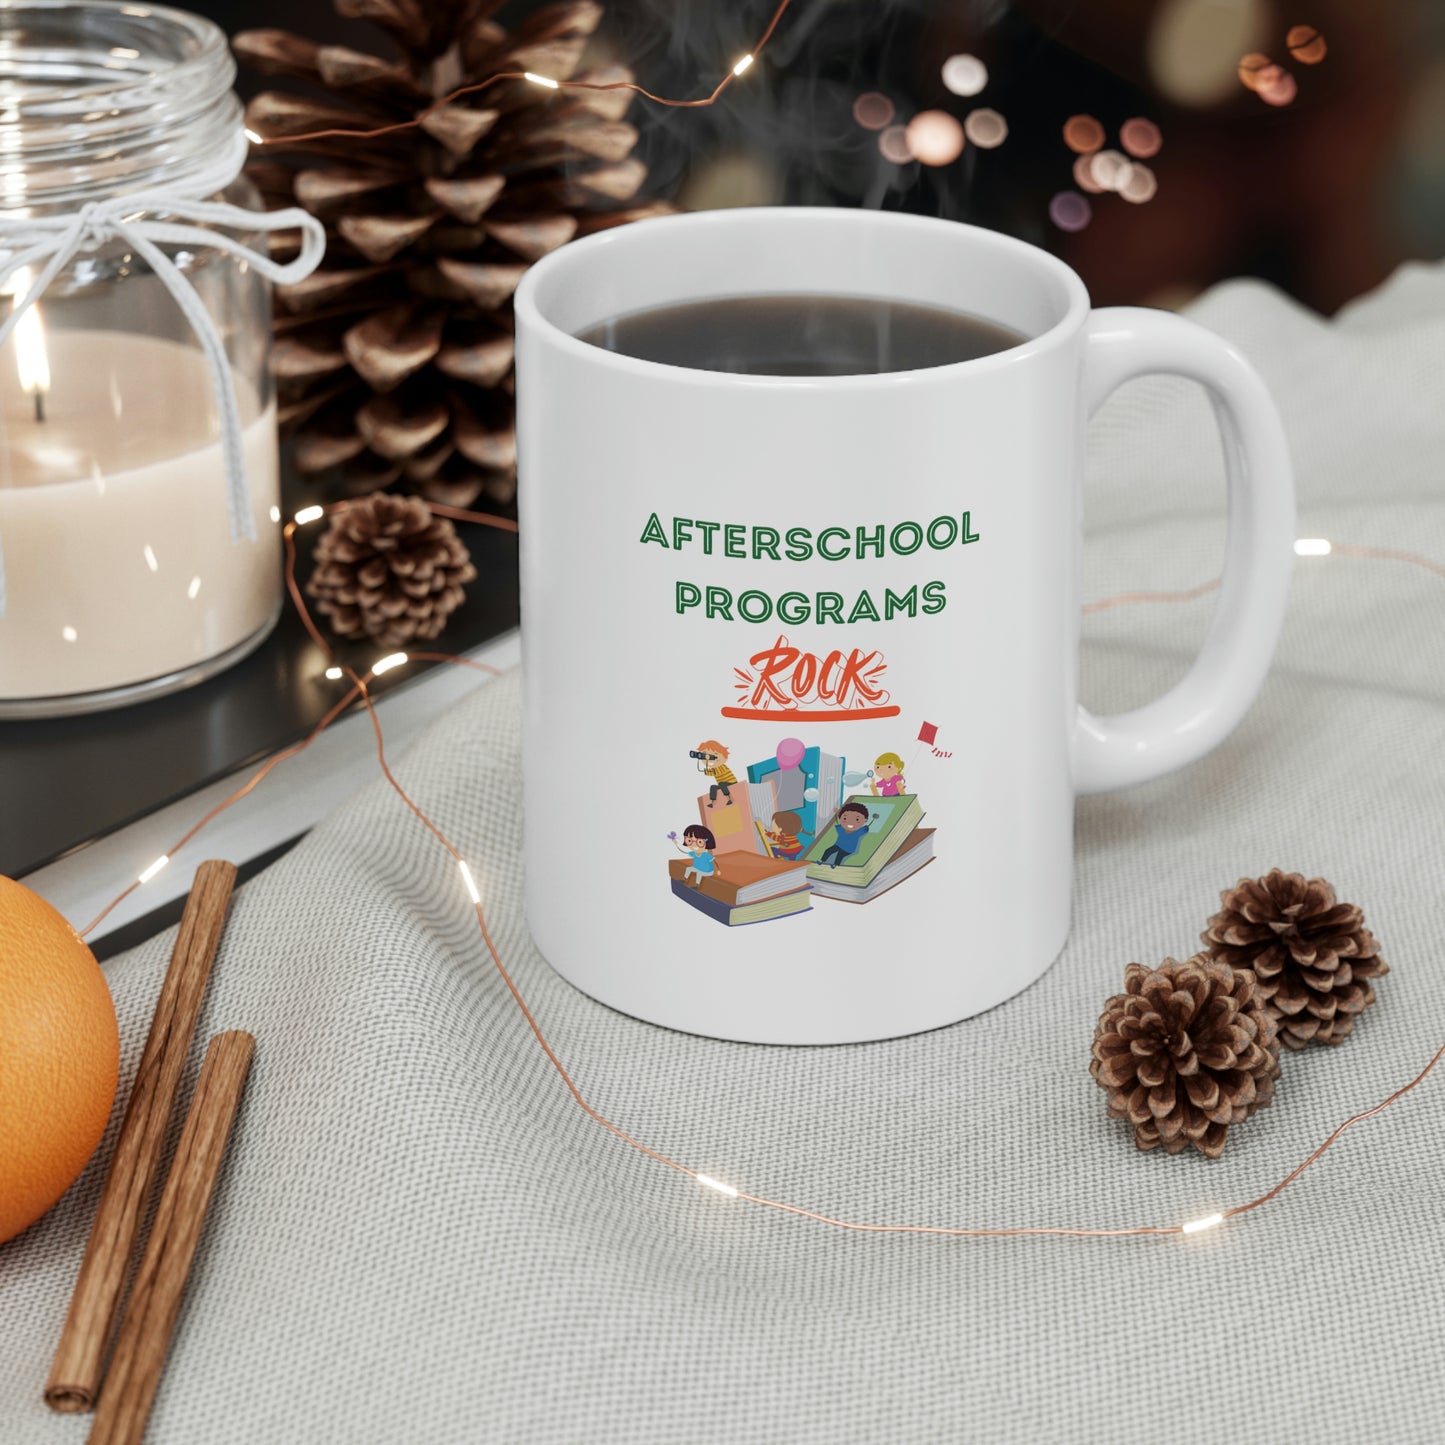 Afterschool Programs Rock - Ceramic Mug 11oz